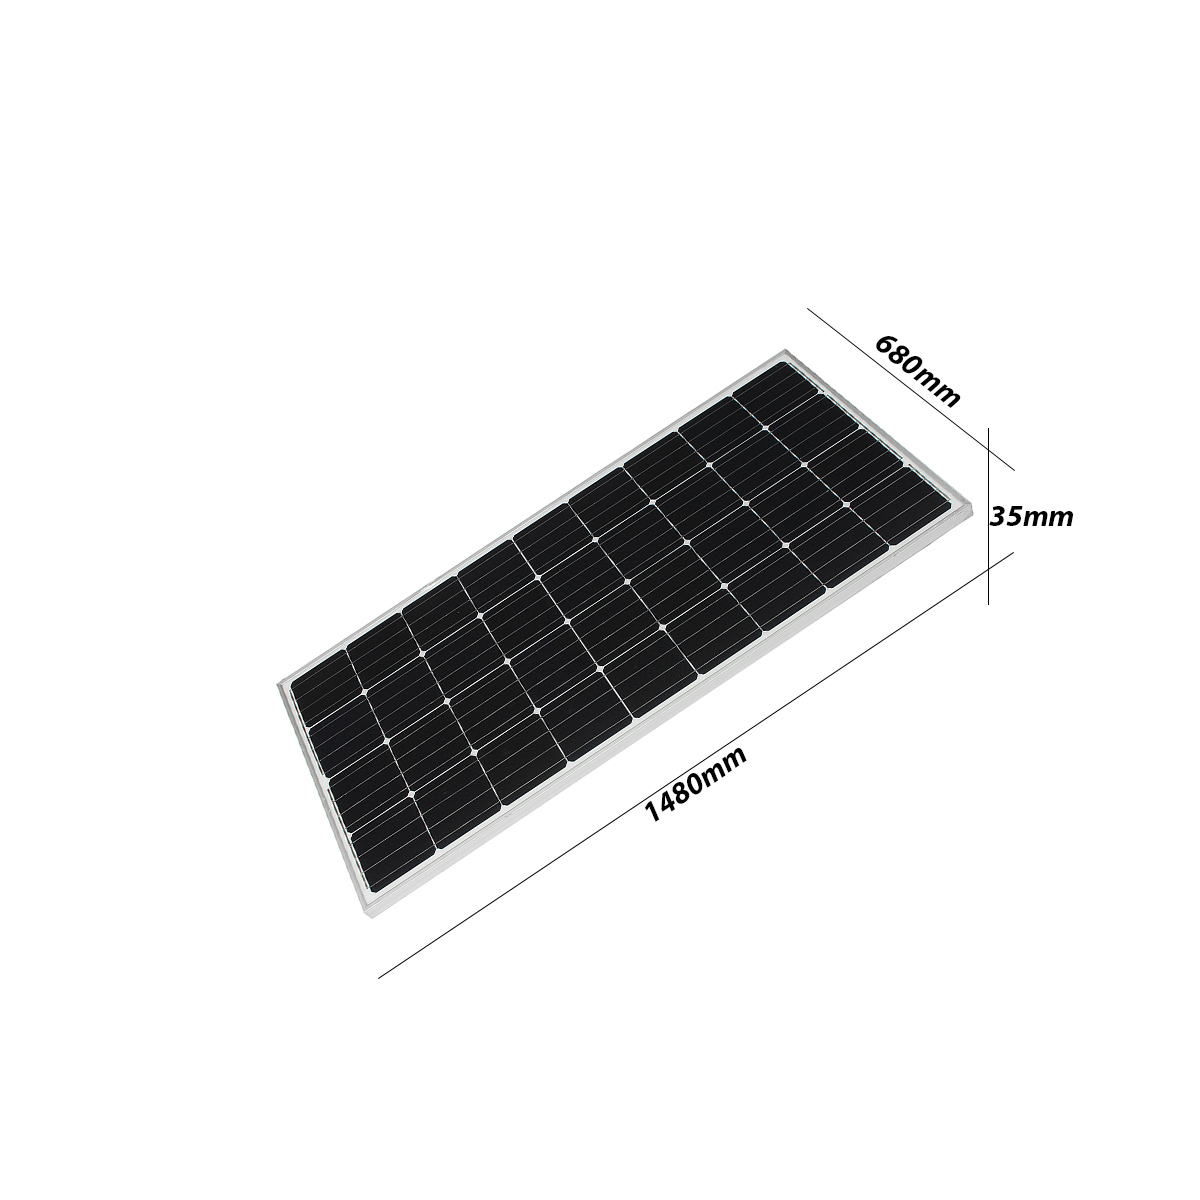 Elfeland-M-140-140W-18V-Mono-Solar-Panel-Battery-Charger-For-Boat-Caravan-Motorhome-1292680-6